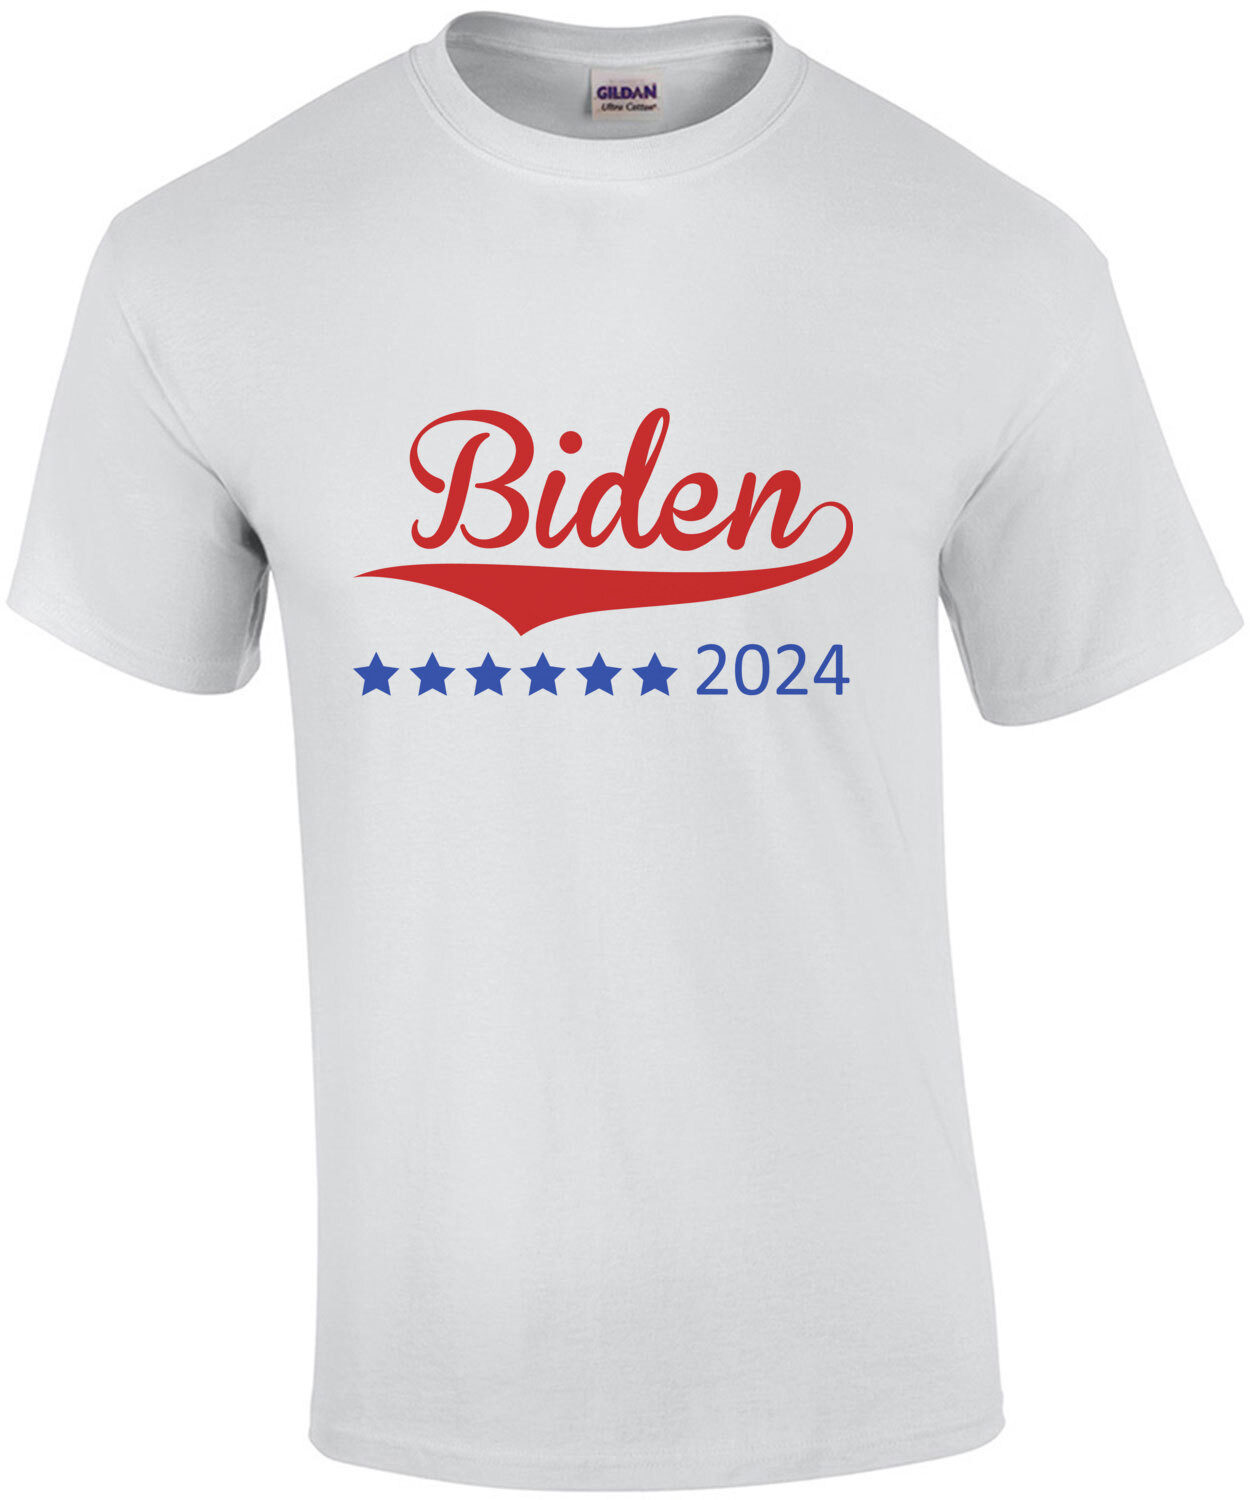 Biden 2024 - Joe Biden 2024 Election T-Shirt